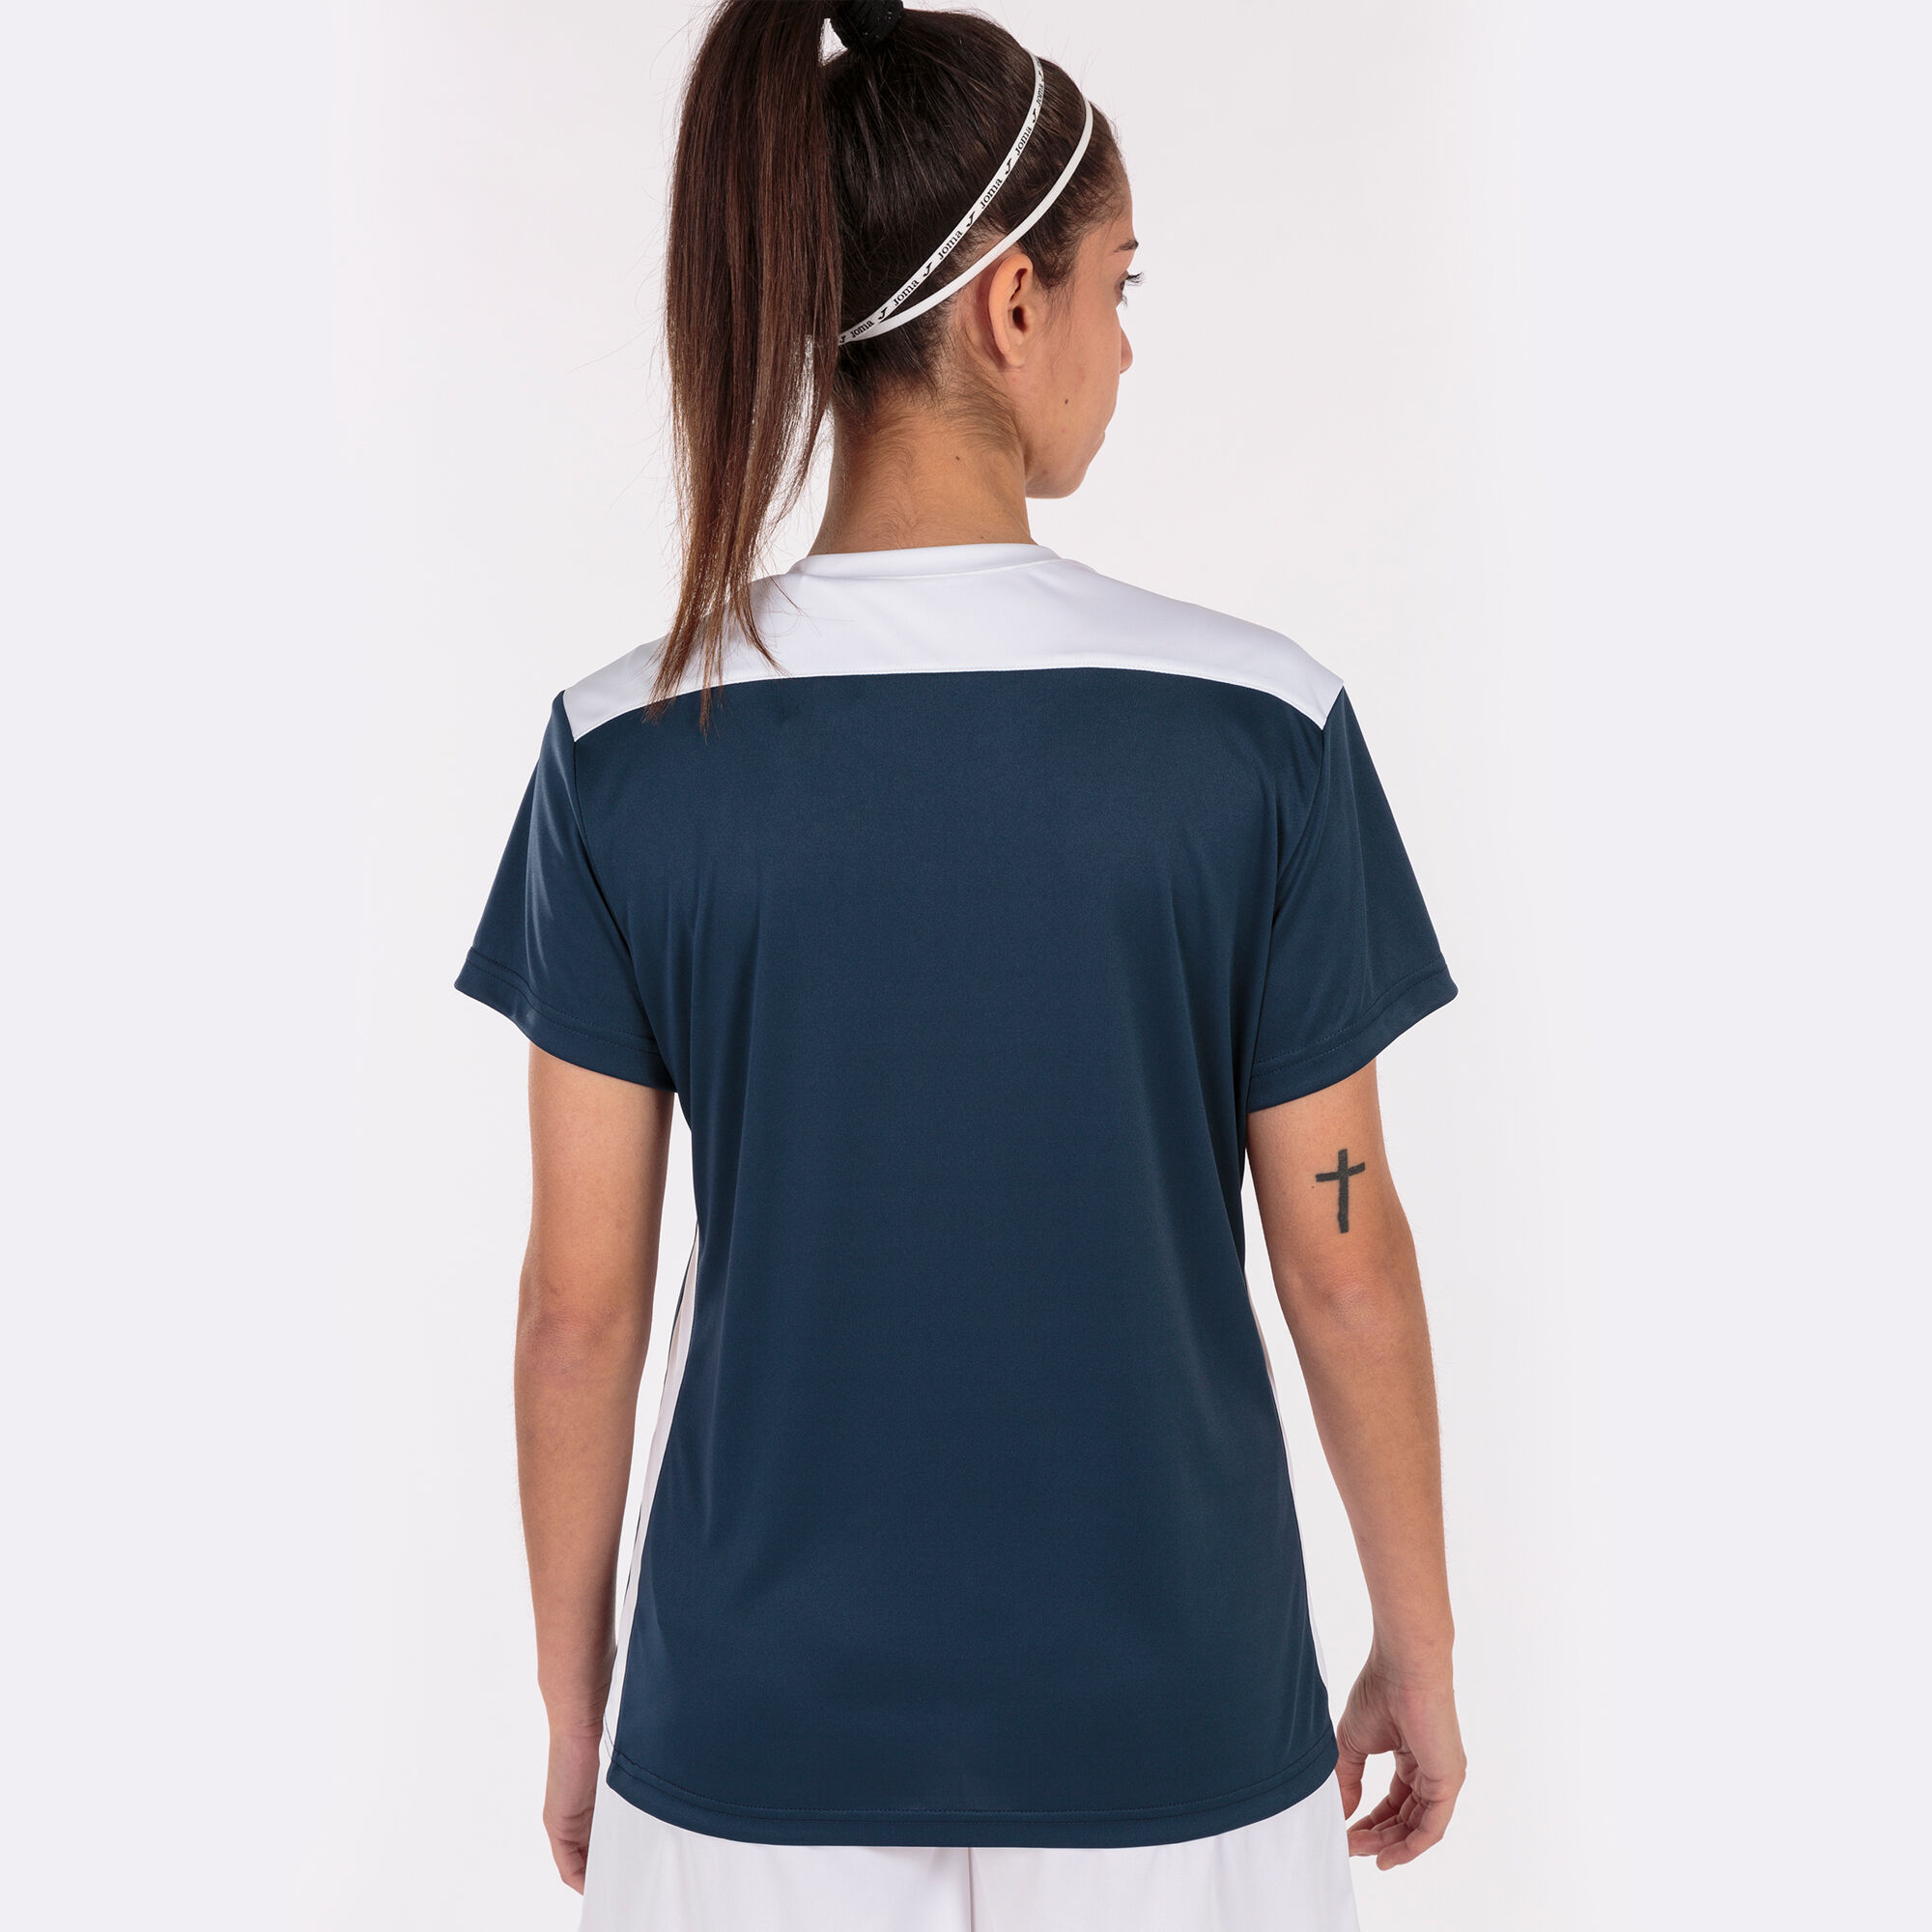 Camiseta manga corta mujer Championship VI marino blanco